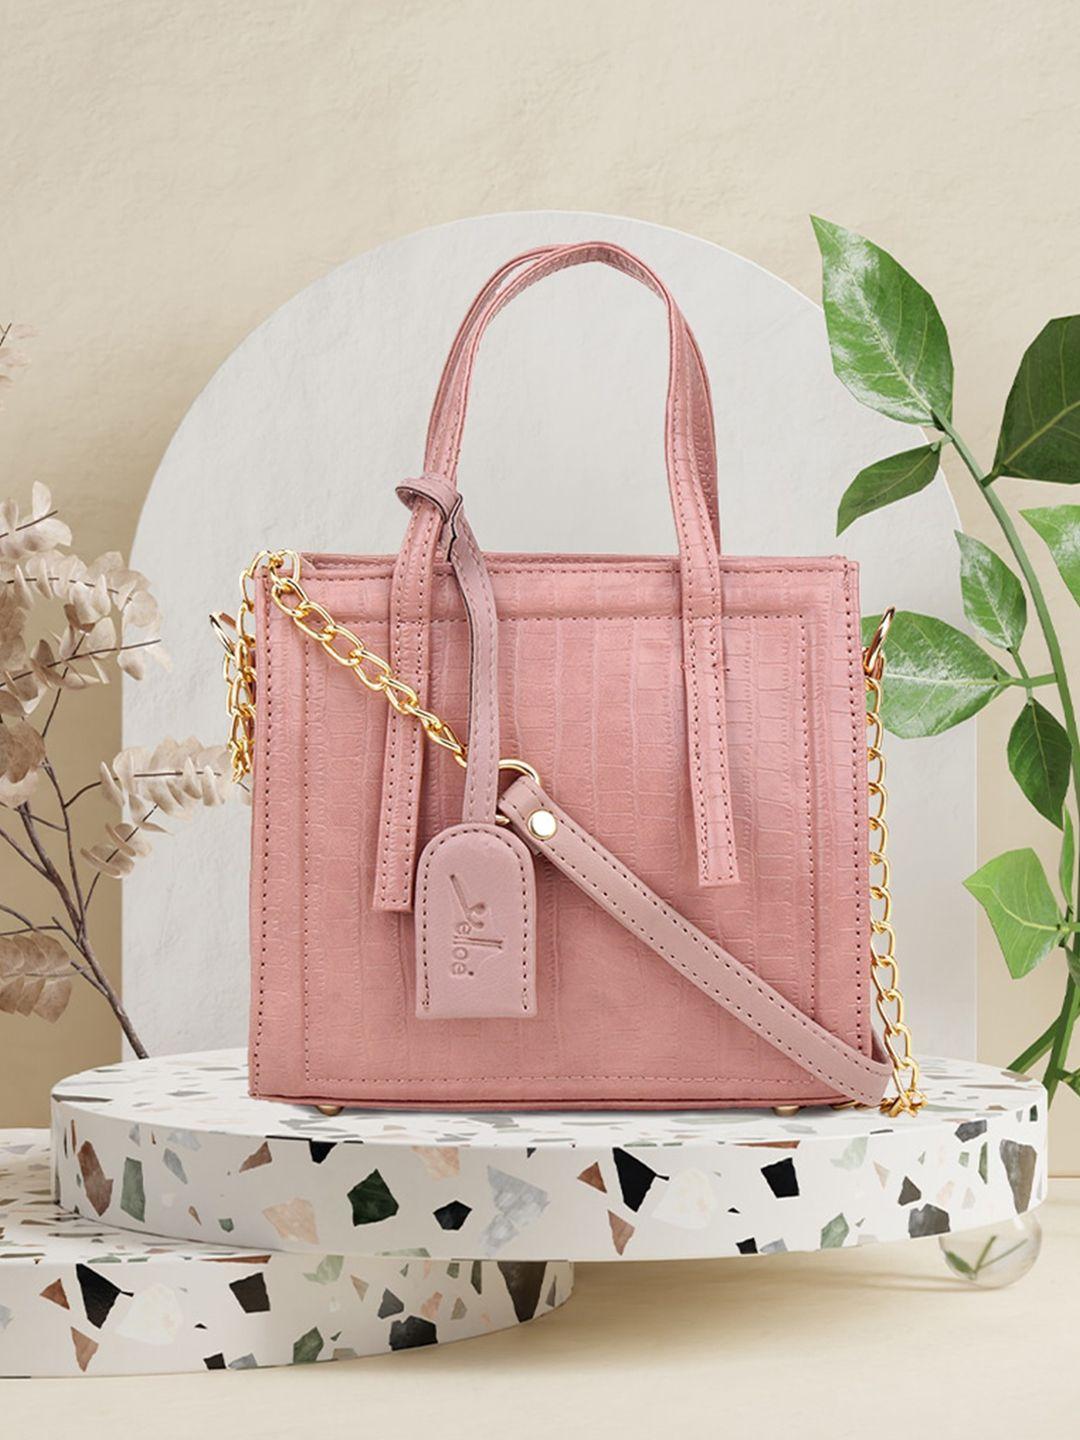 yelloe-pink-structured-handheld--textured-bag-with-applique